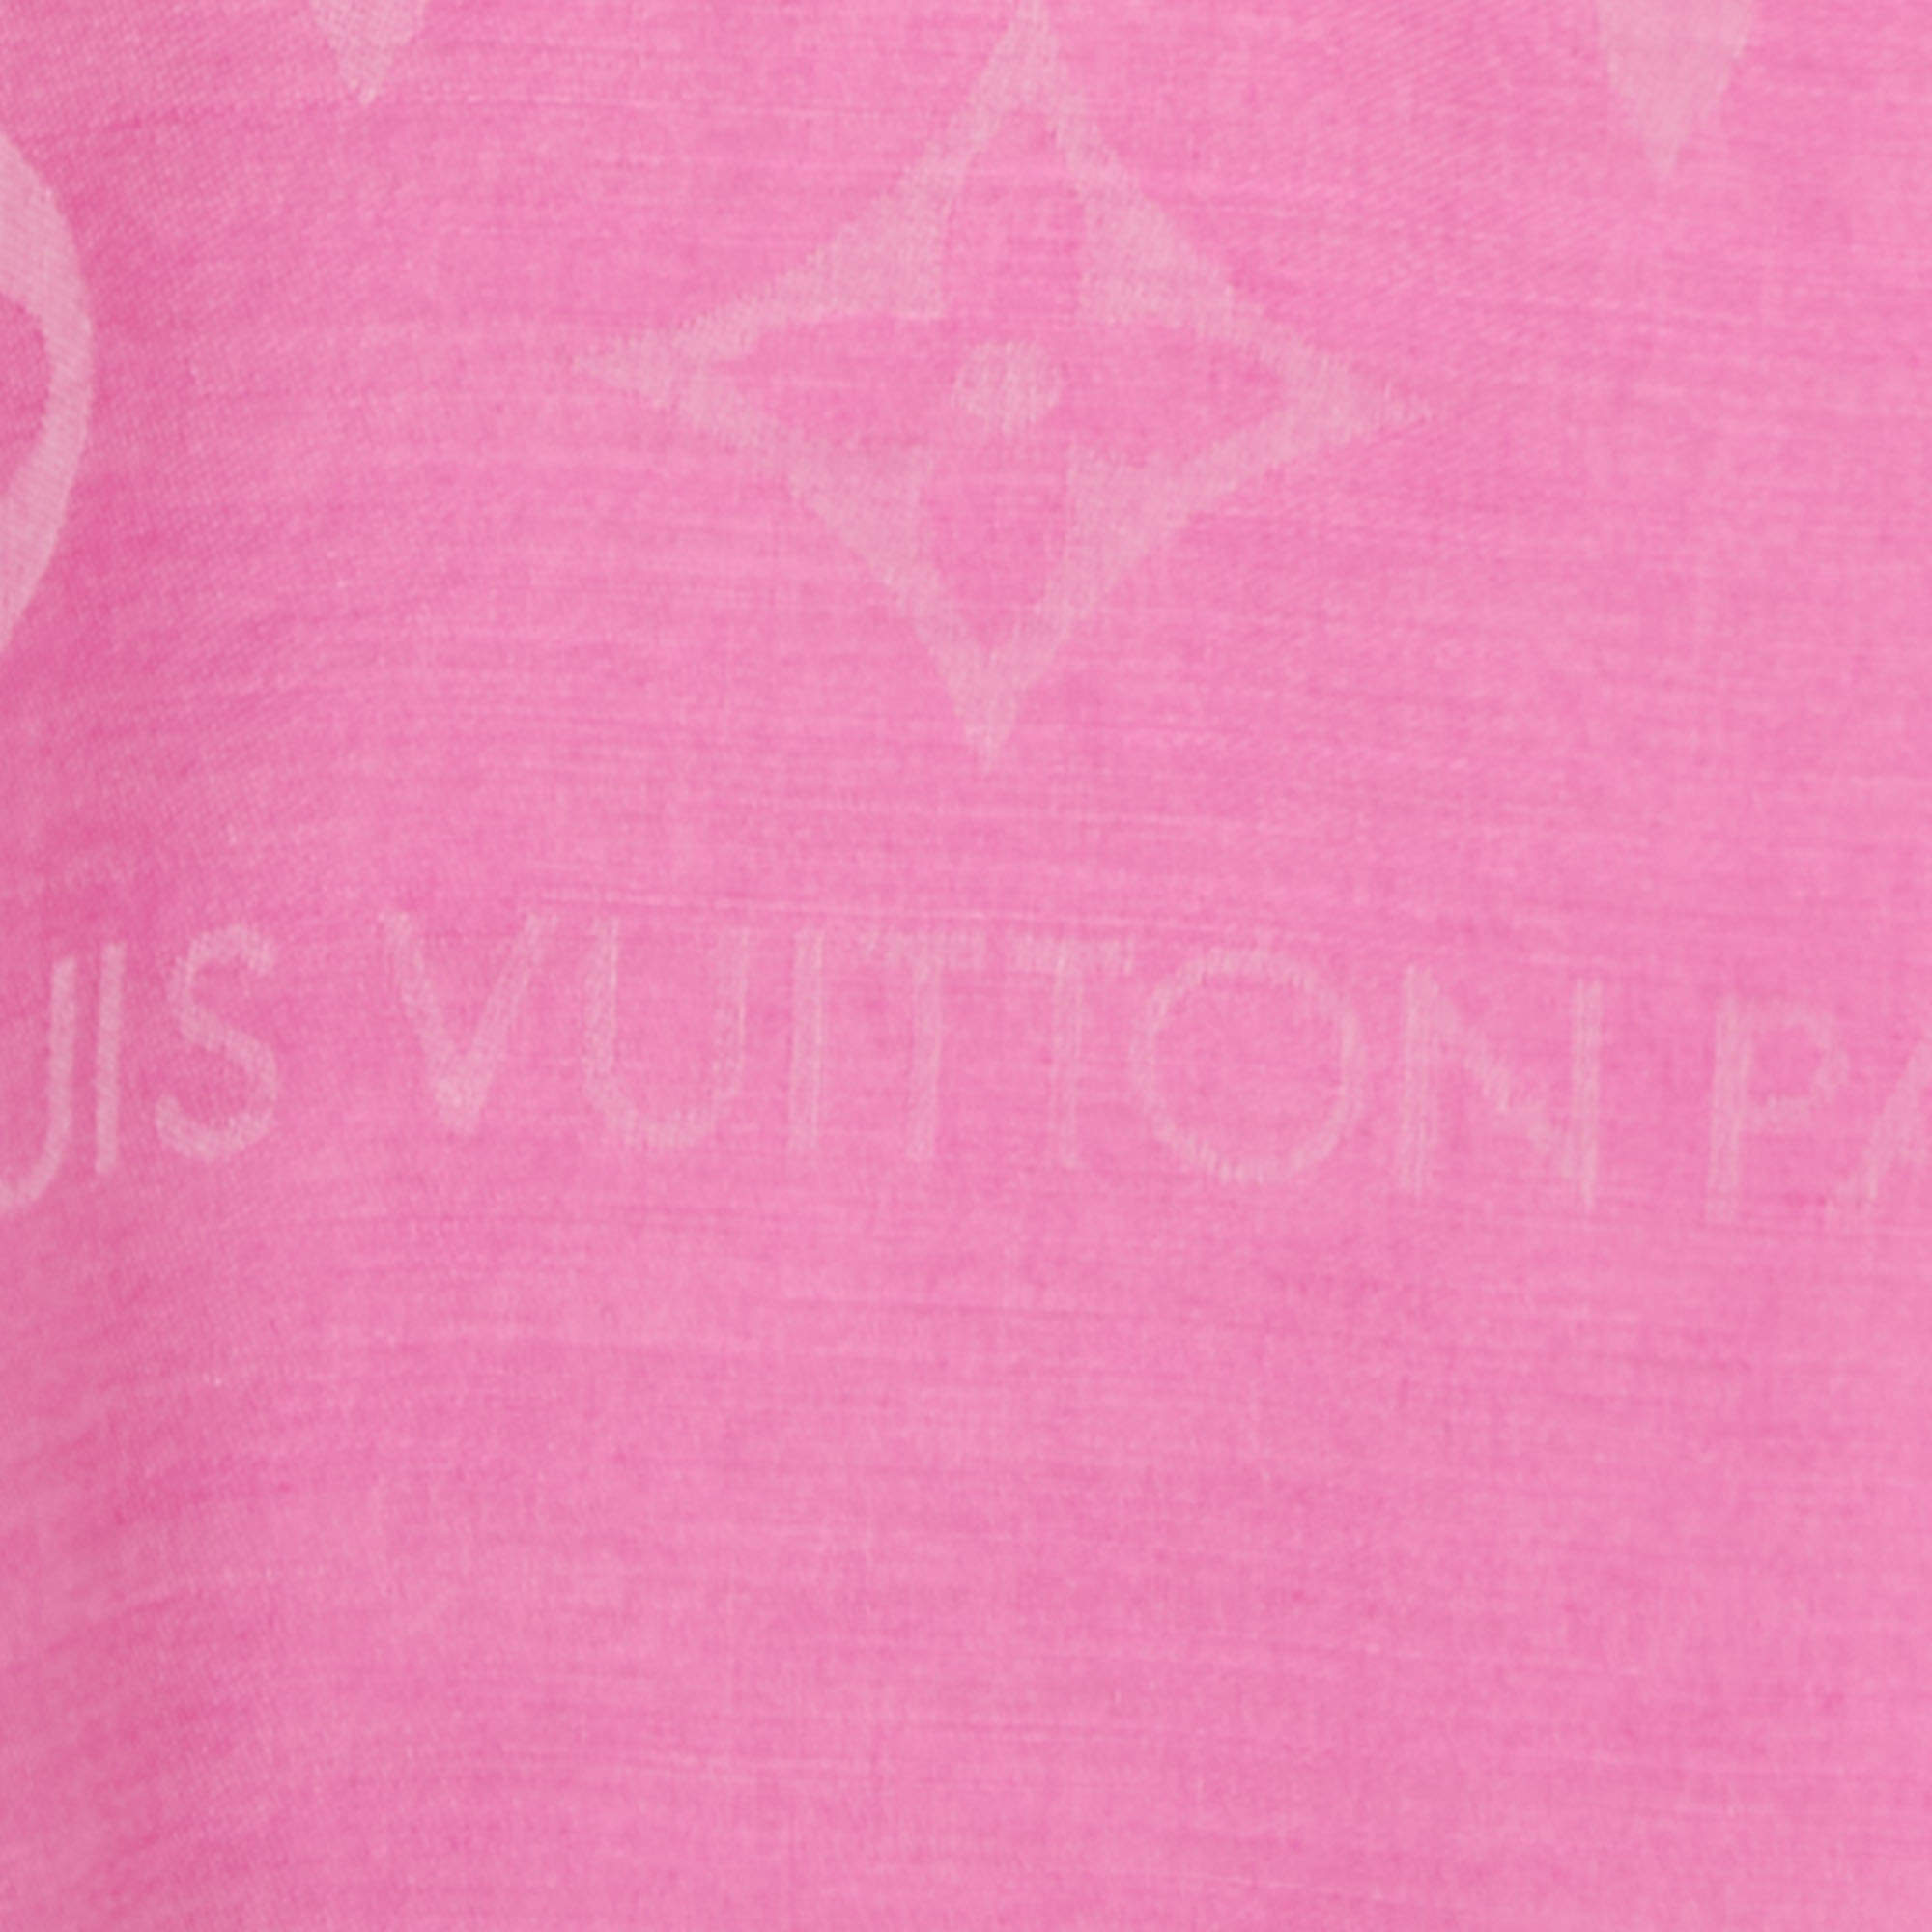 Stole Louis Vuitton Pink in Cotton - 21526844